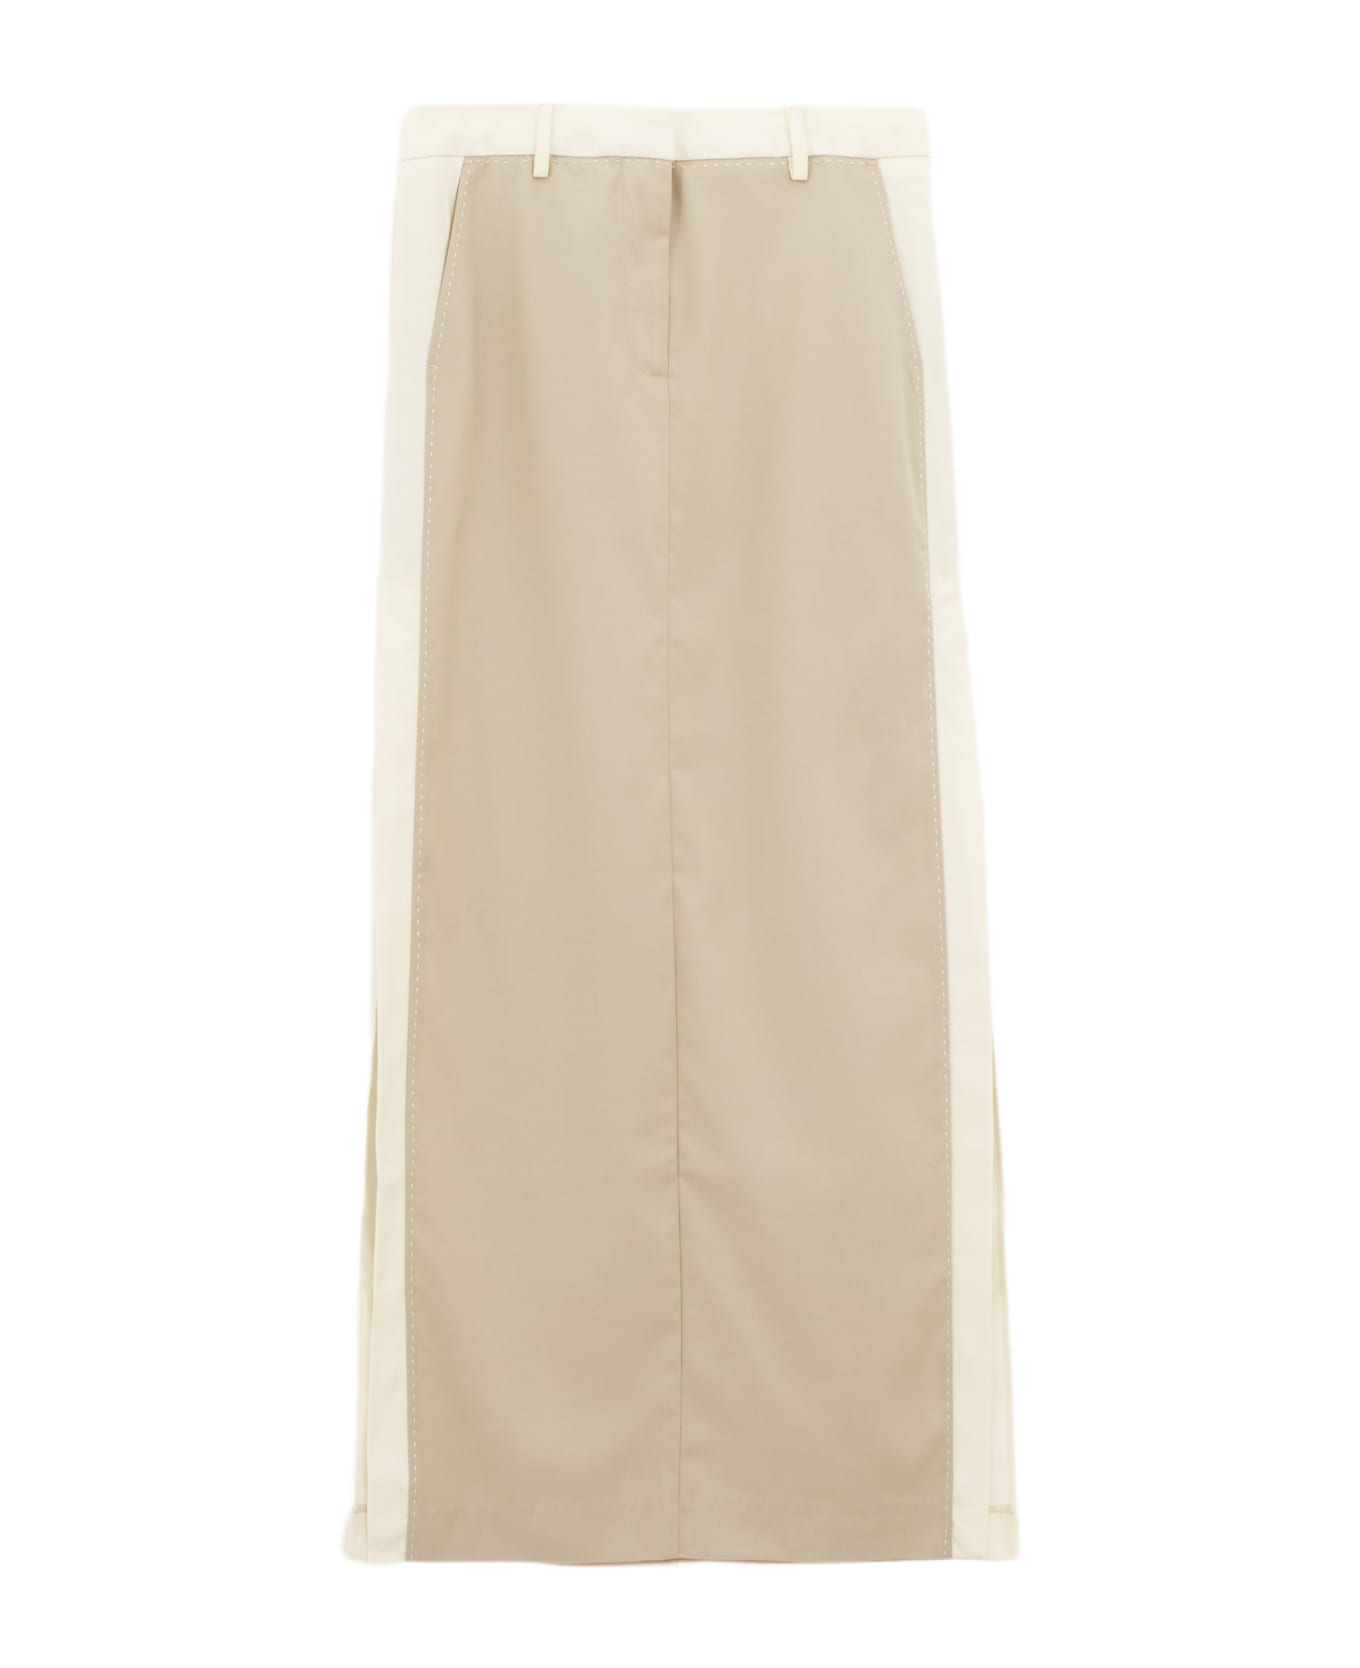 REMAIN Birger Christensen Two Color Maxi Skirt - beige